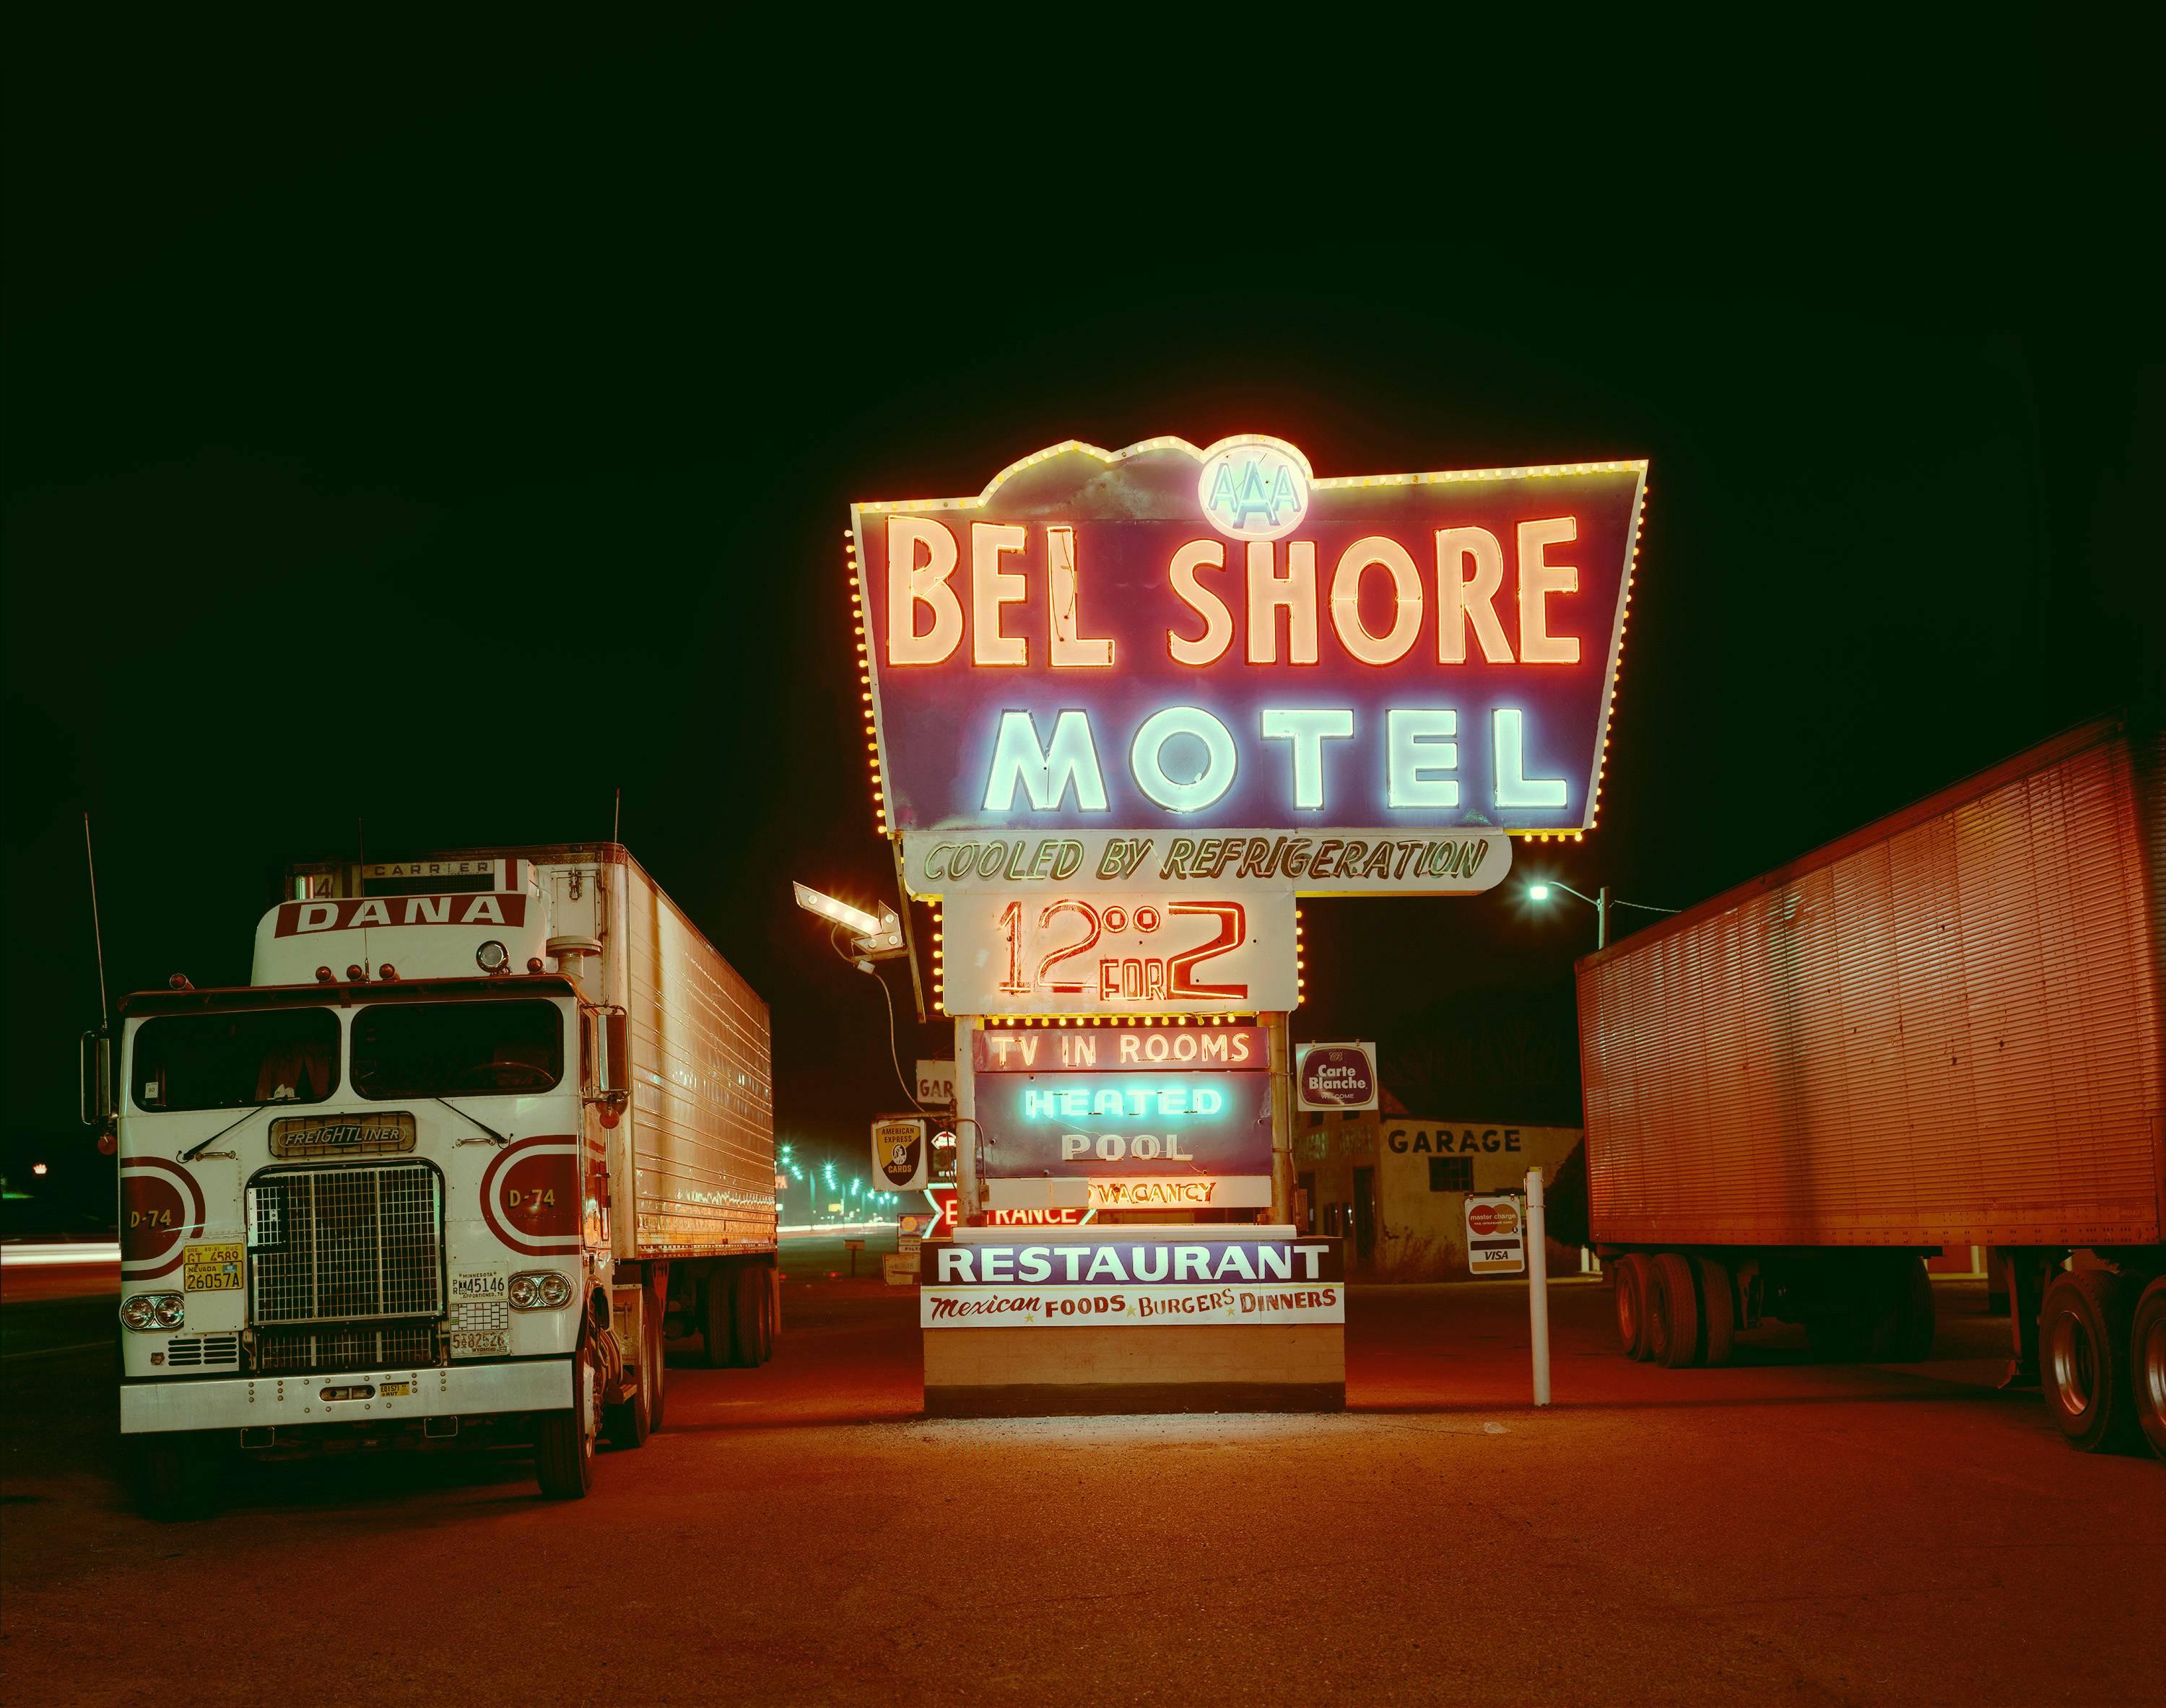 Steve Fitch Landscape Photograph - Bel Shore Motel sign, Highway 80, Deming, New Mexico; December, 1980